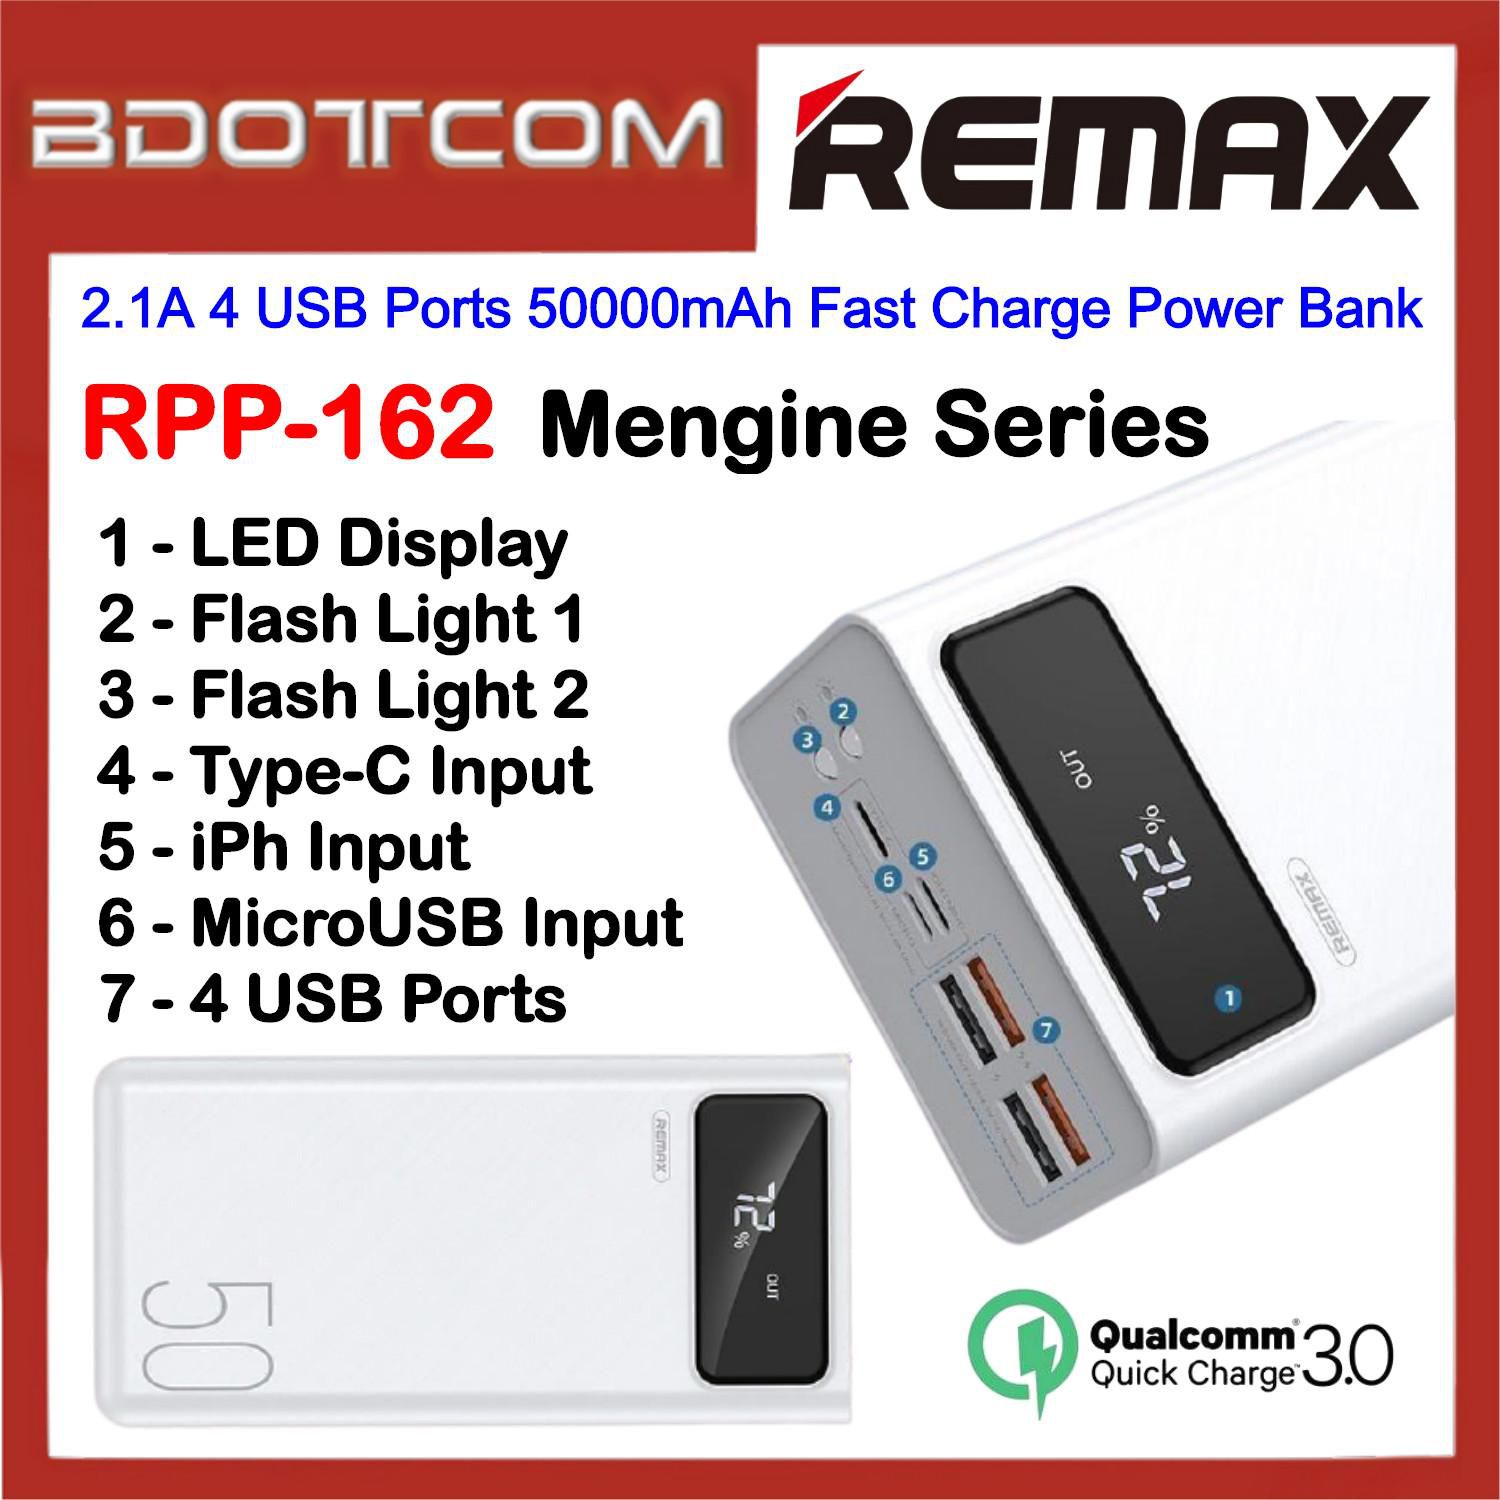 Remax RPP-162 Mengine Series 2.1A 4 USB Ports + 3 Inputs 50000mAh Power Bank